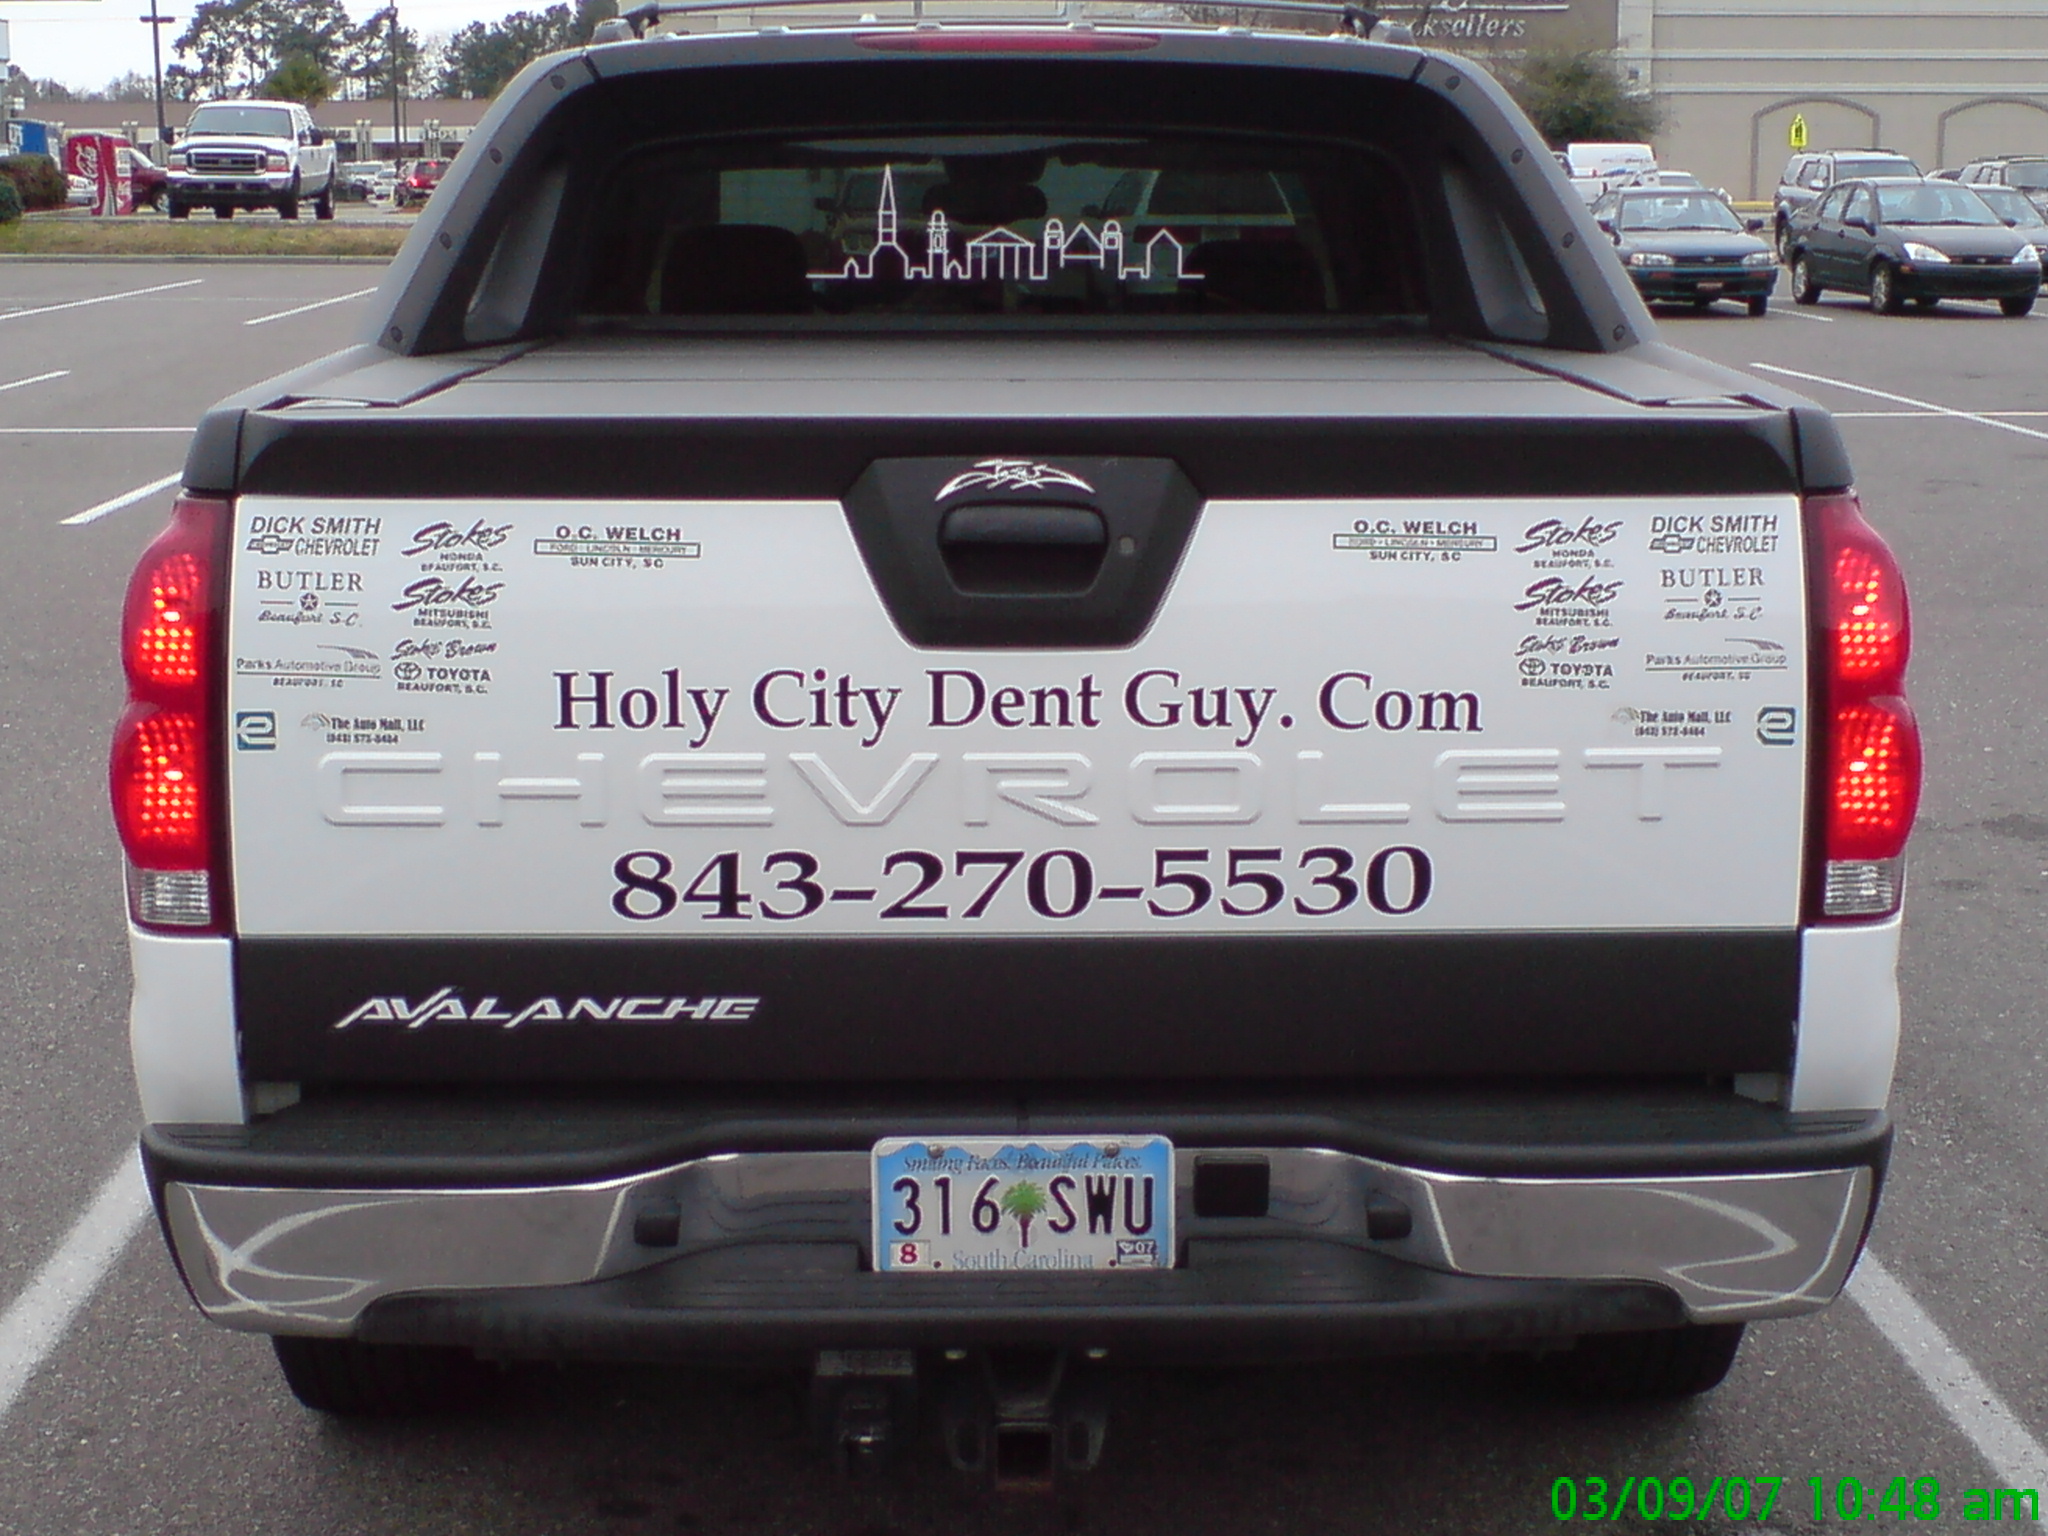 Holy City Dent Guy-Paintless dent repair